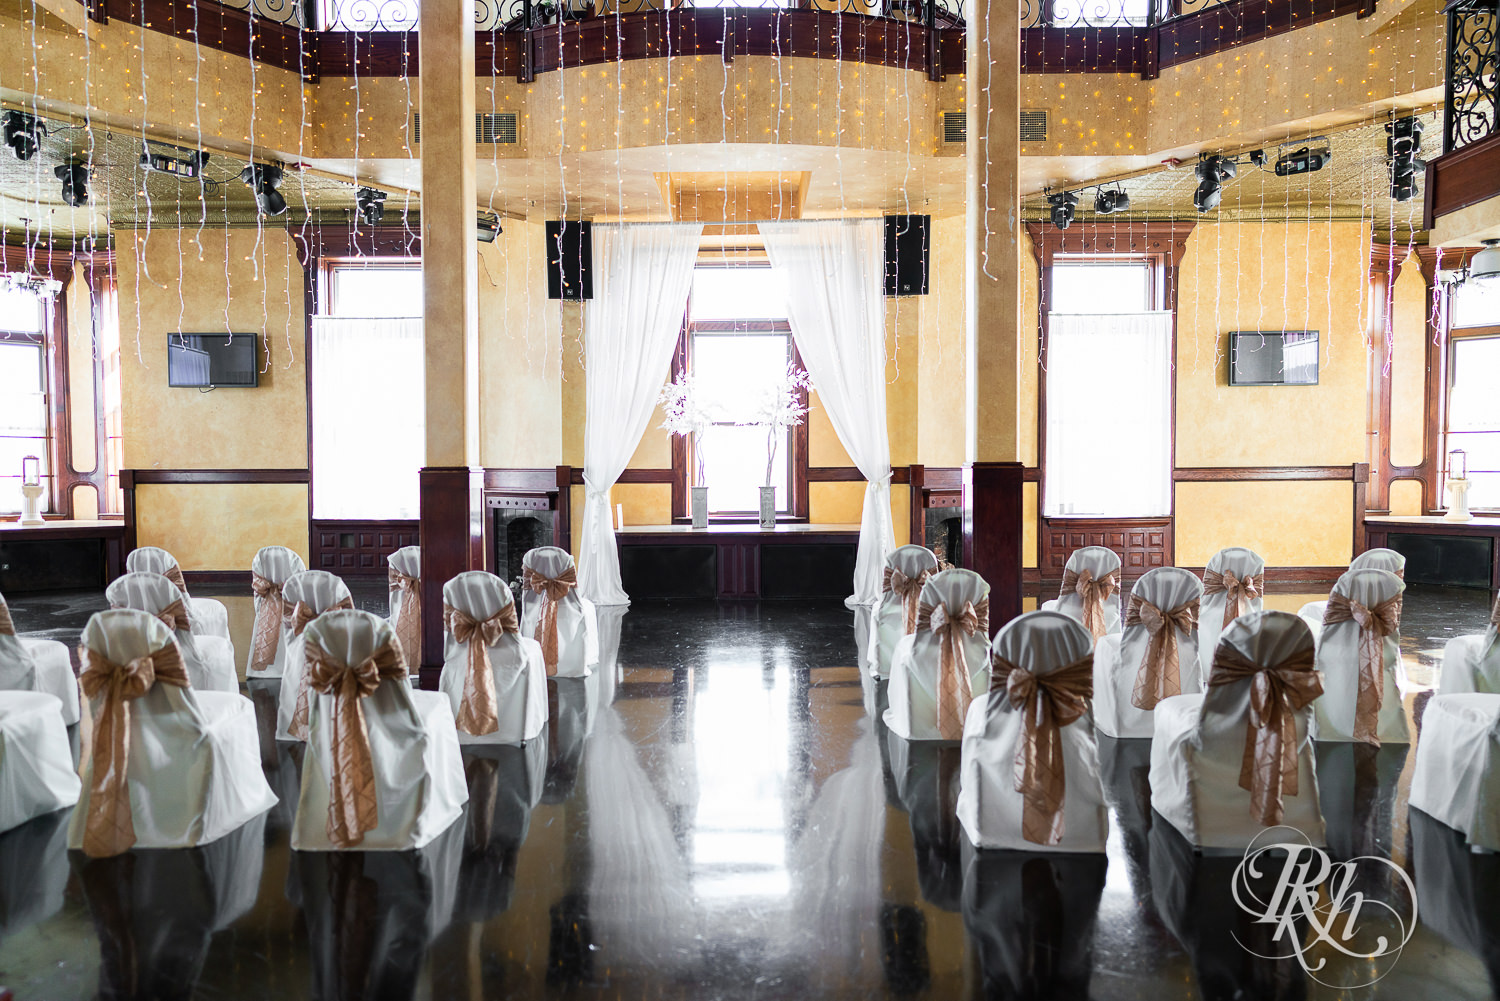 Indoor wedding ceremony setup at the Historic Concord Exchange in Saint Paul, Minnesota.